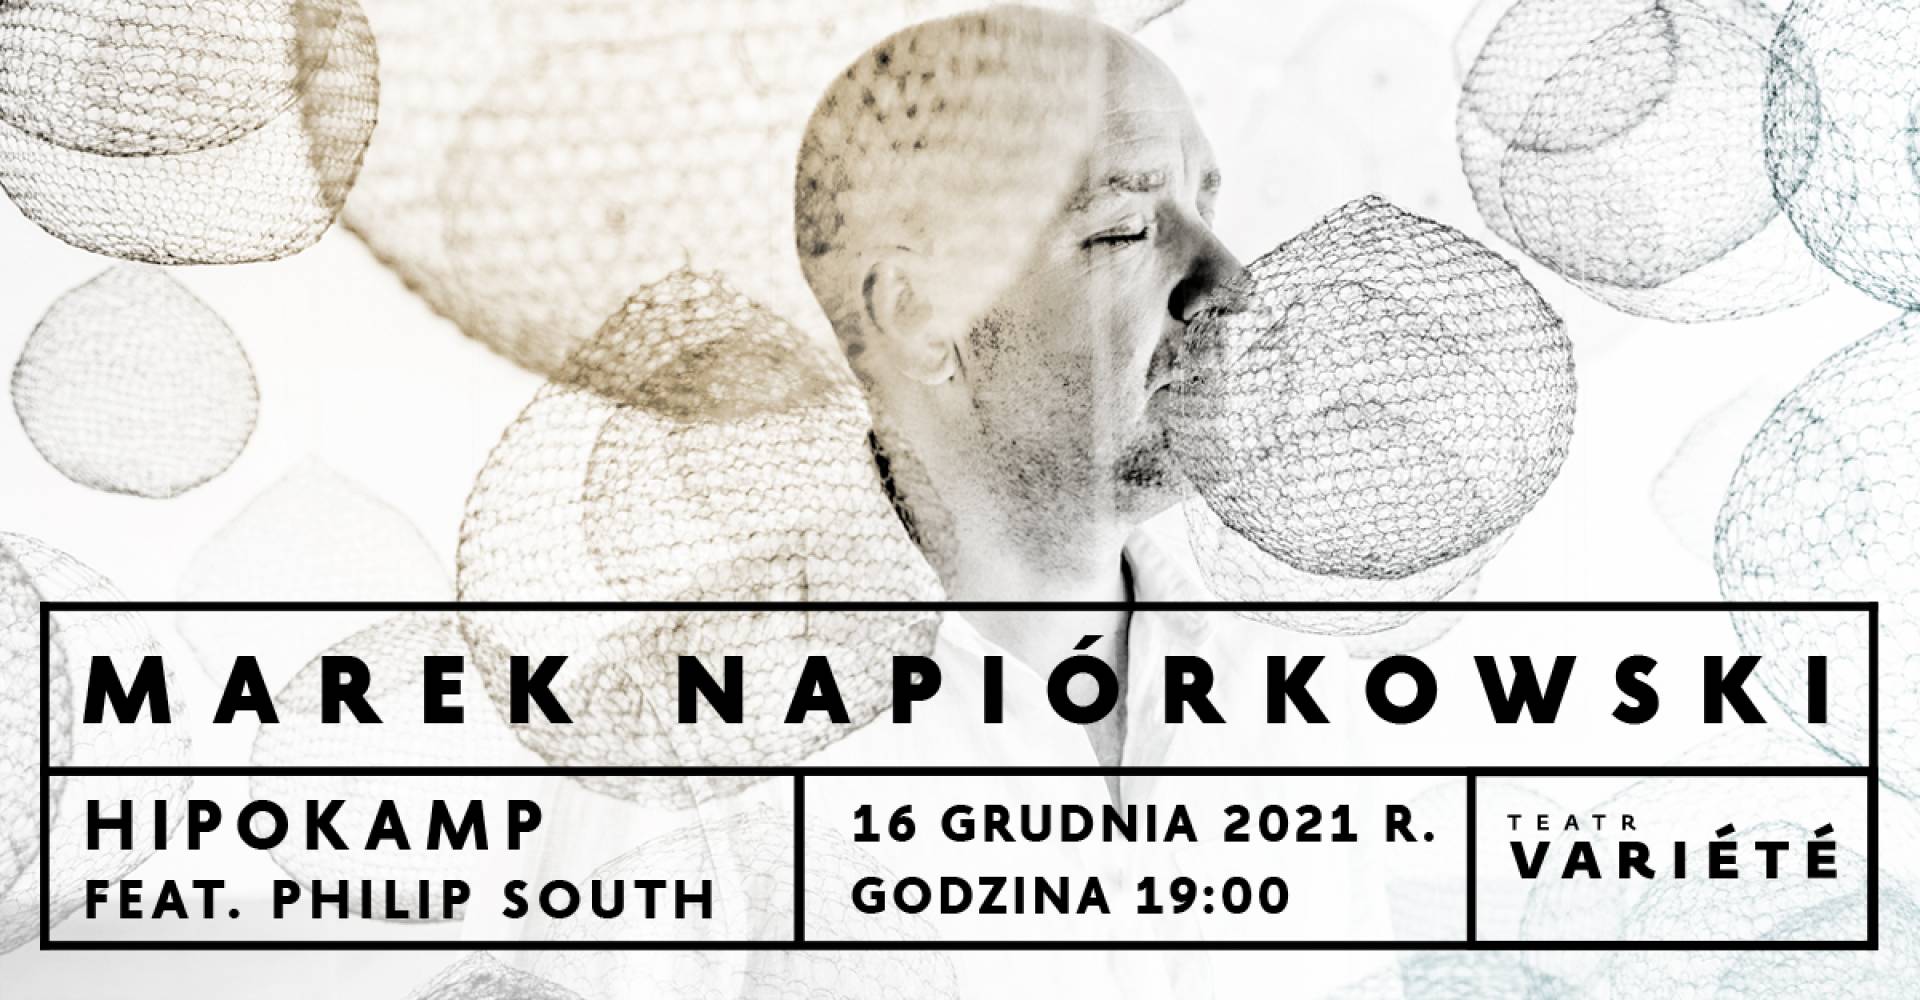 Marek Napiórkowski "HIPOKAMP" feat. Philip South